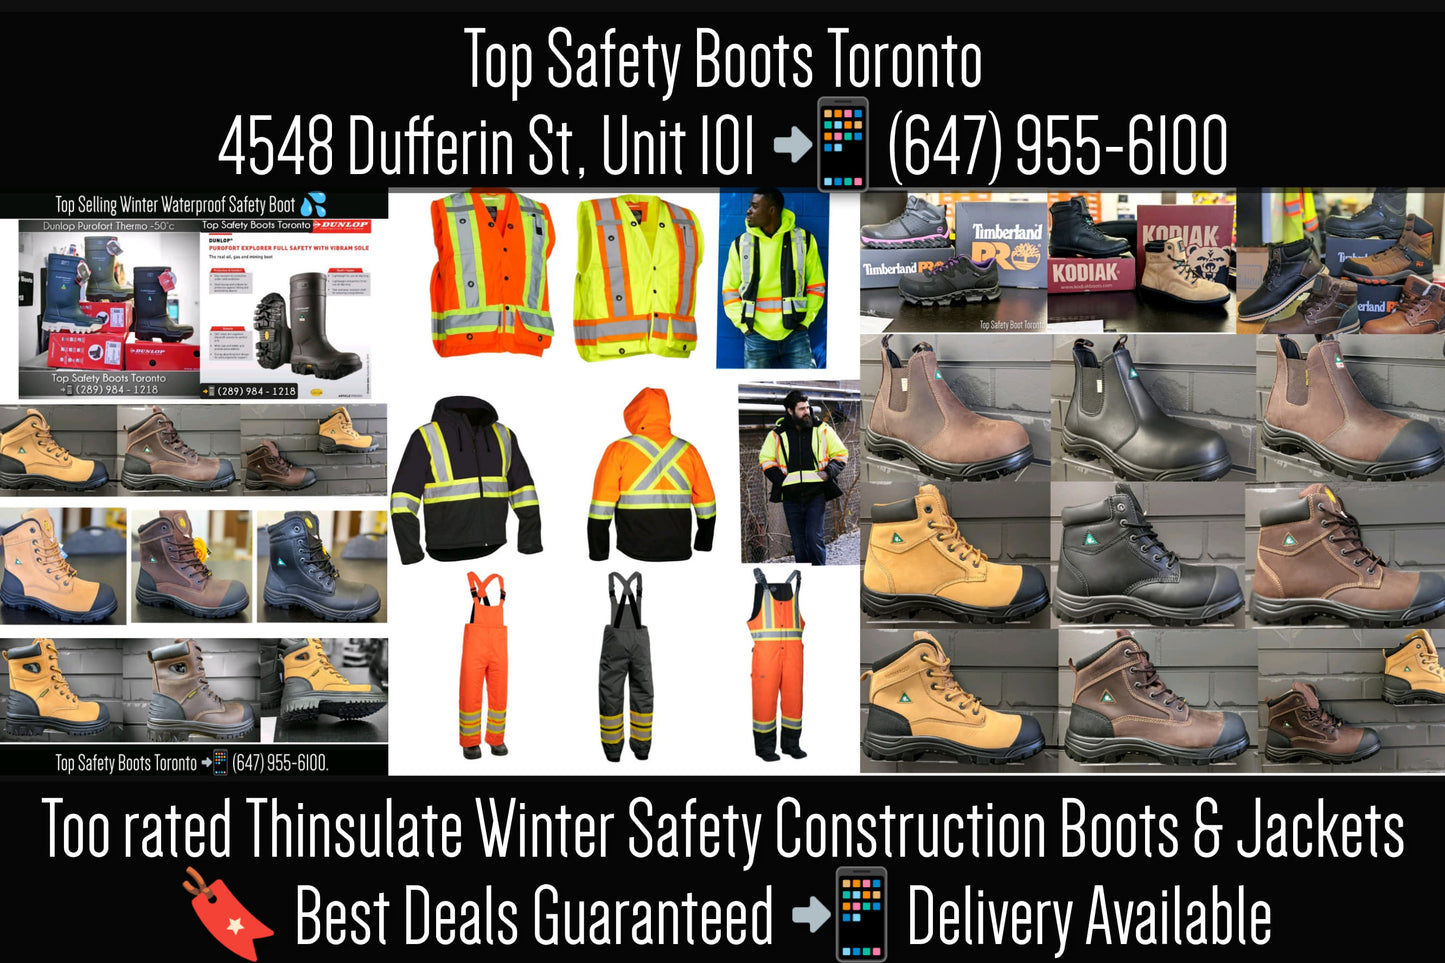 Composite Toe - Men's Lightweight Safety Boot - CSA Certified 5977C